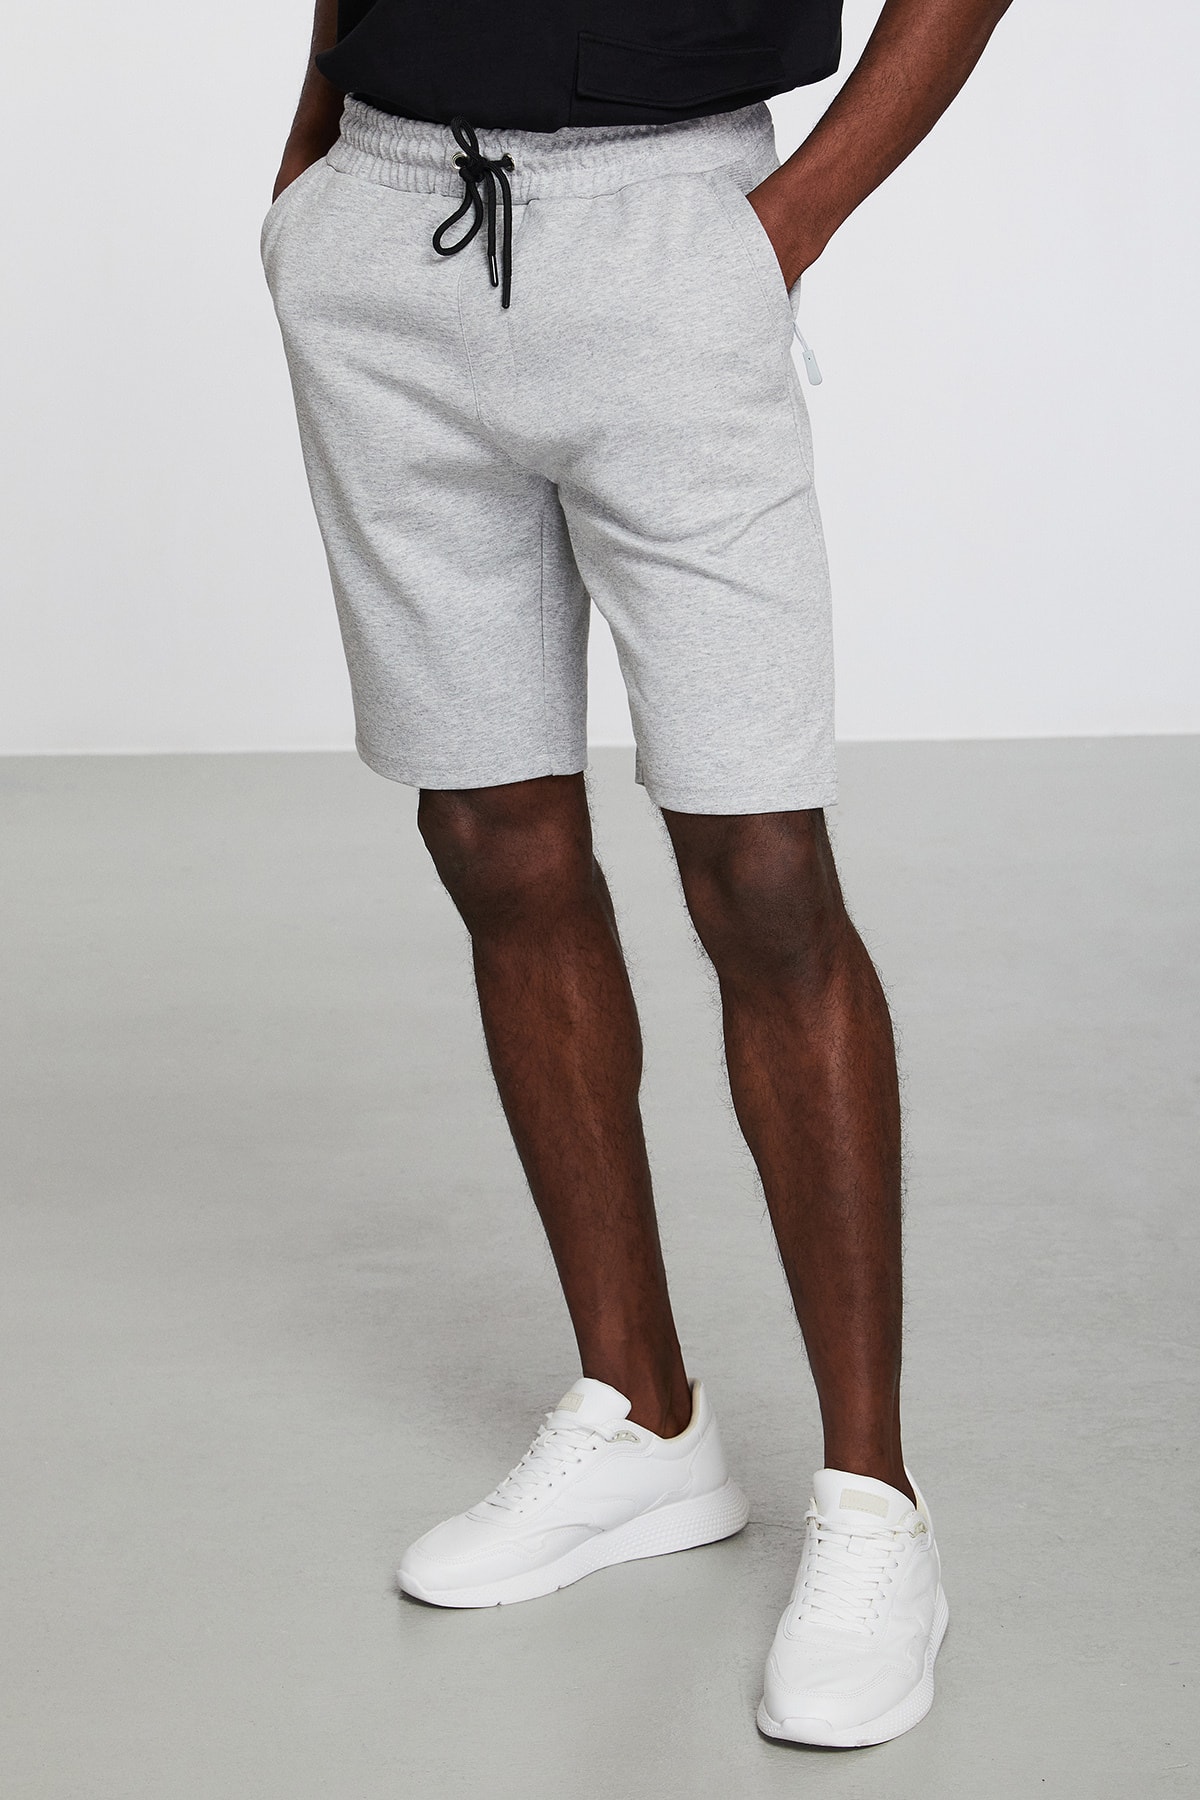 GRIMELANGE Camillo Men's Pocket Zippered Light Gray Shorts & Bermudas with Elastic Waist